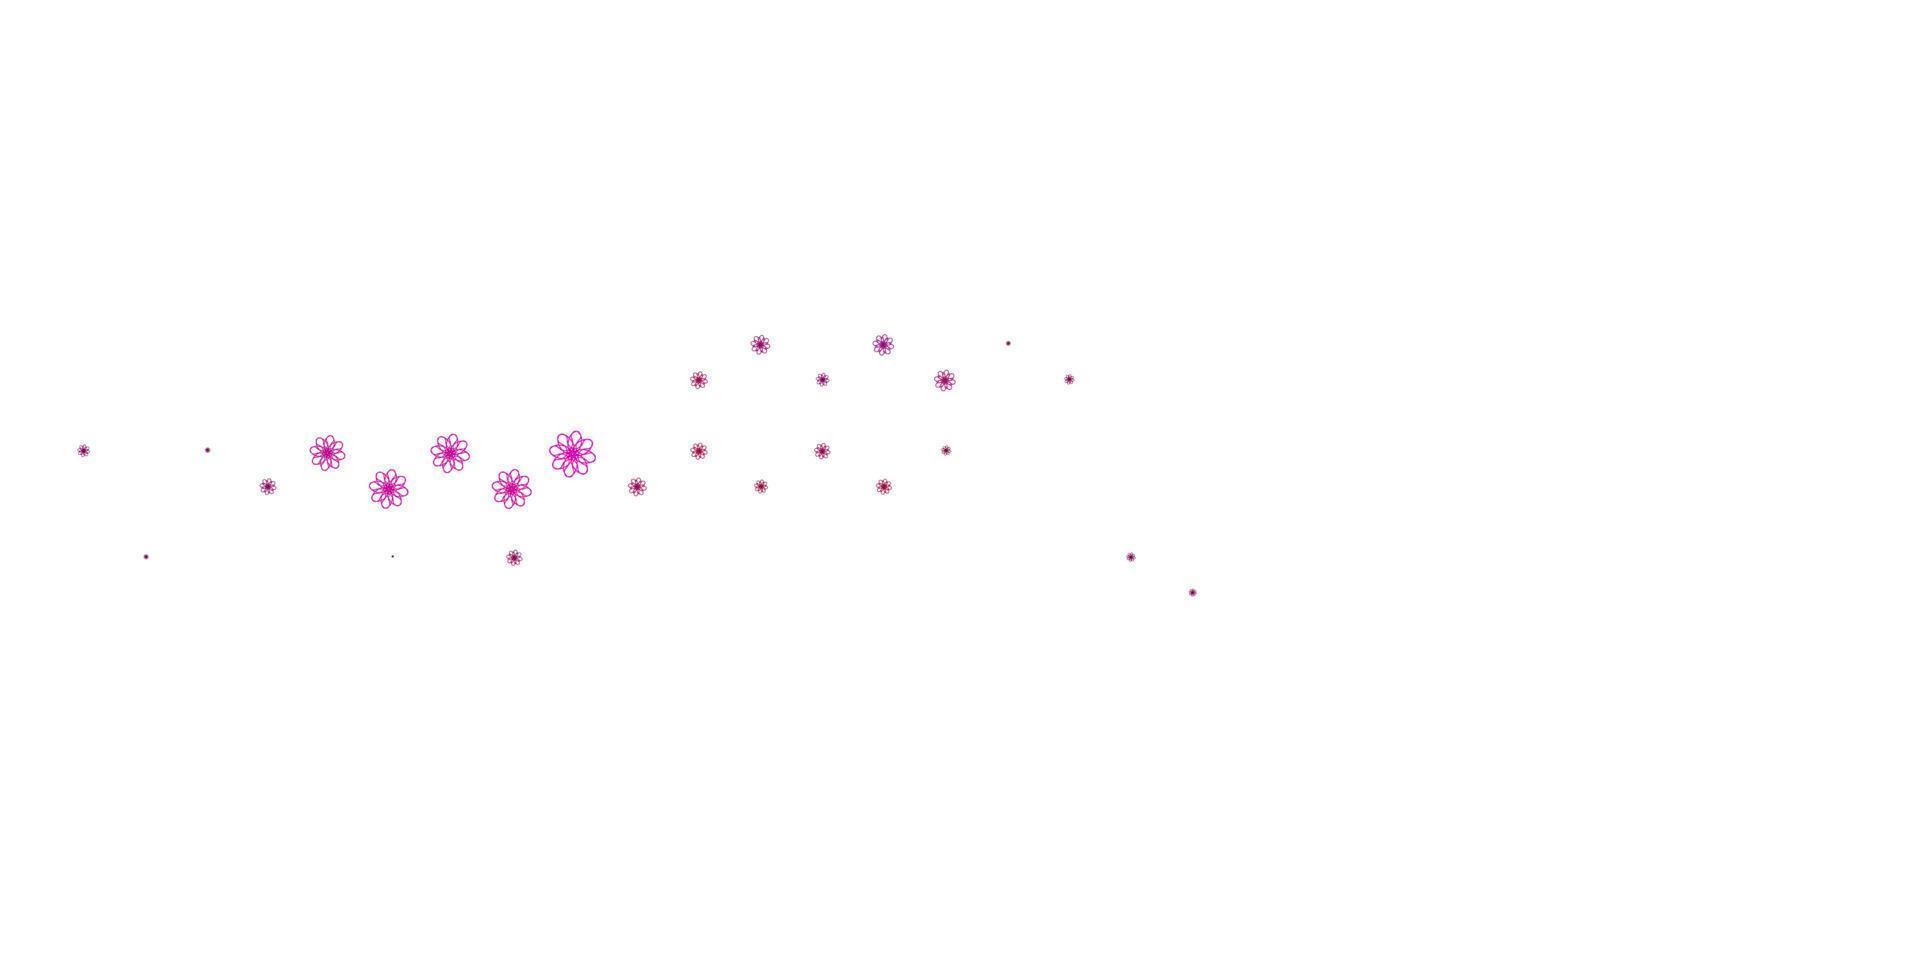 pano de fundo vector rosa claro com curvas.